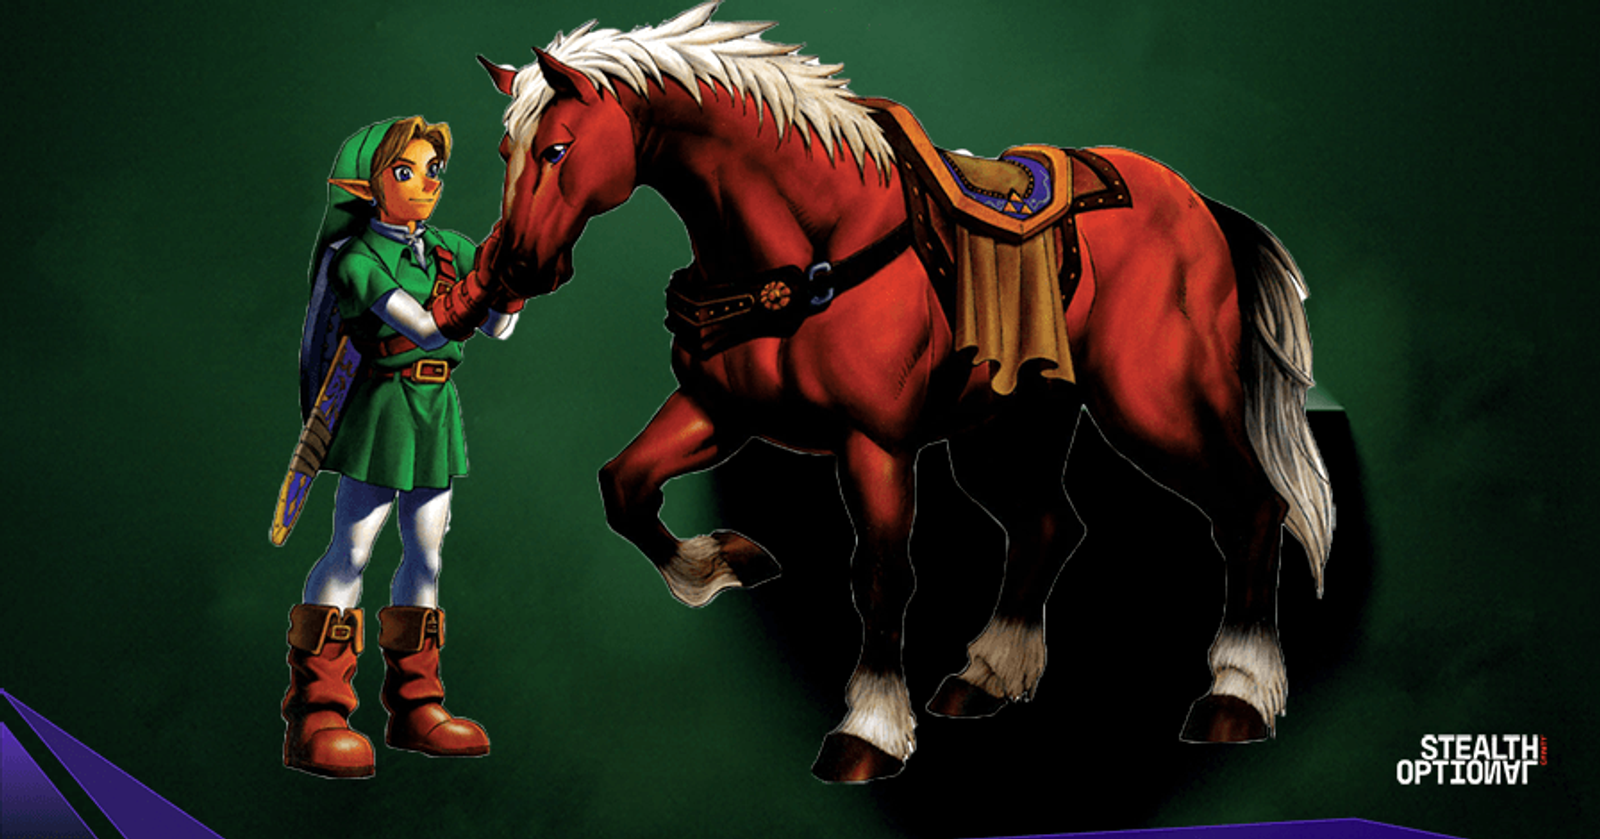 The Legend of Zelda: Ocarina of Time/pt-br - The Cutting Room Floor